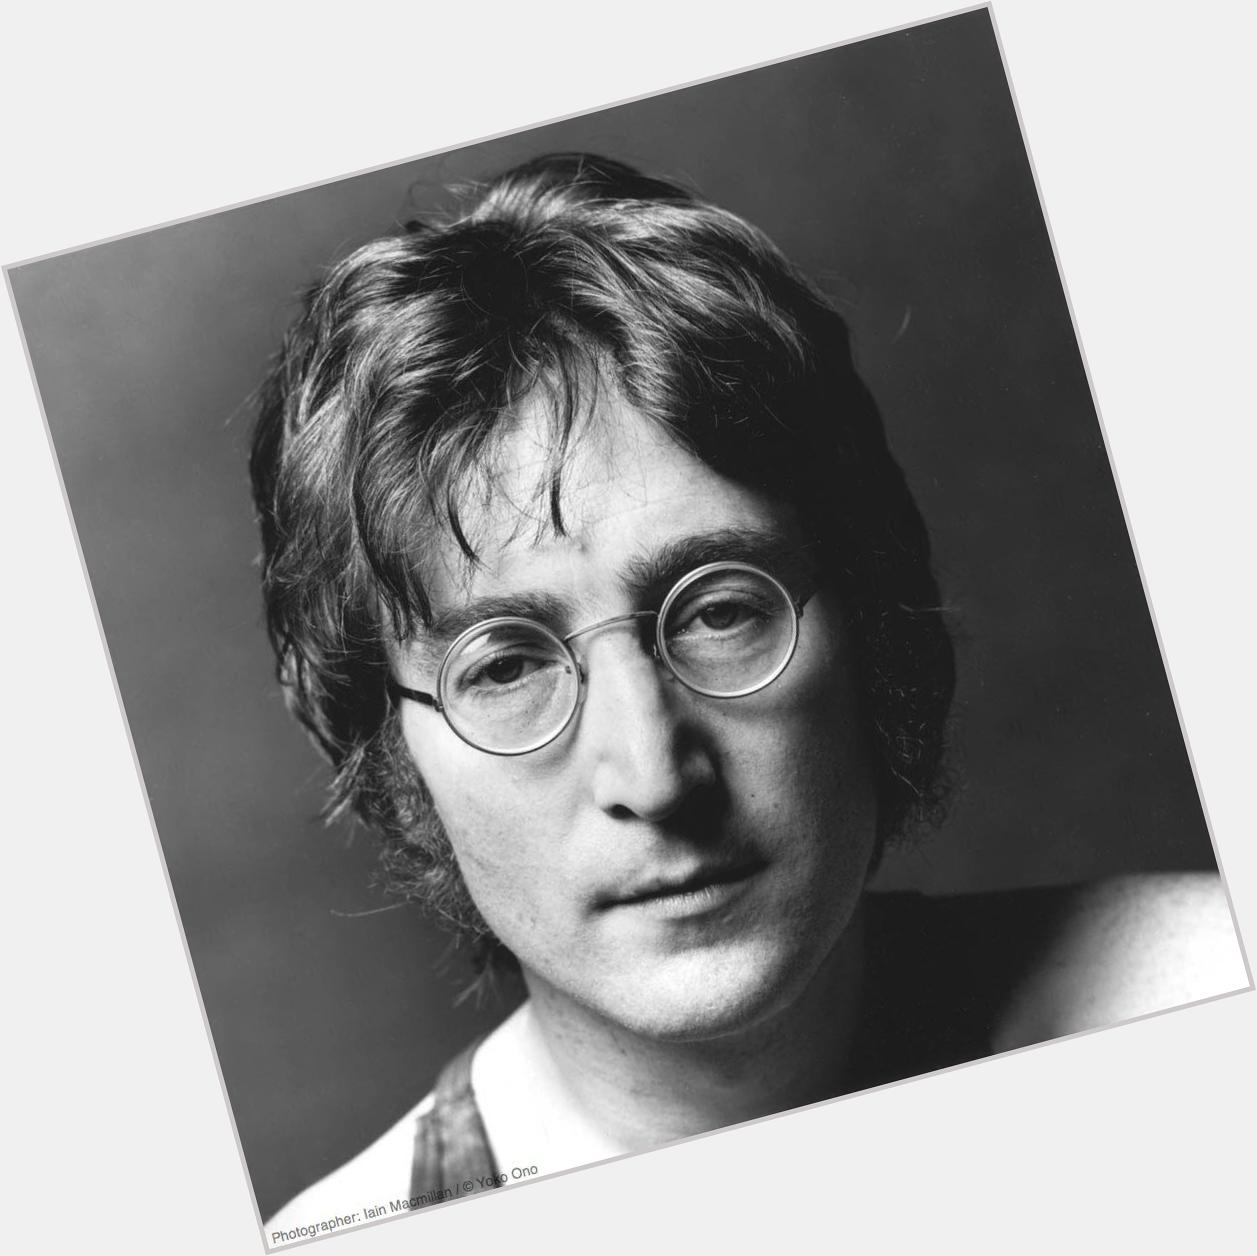 Happy birthday || John Lennon - Imagine with 